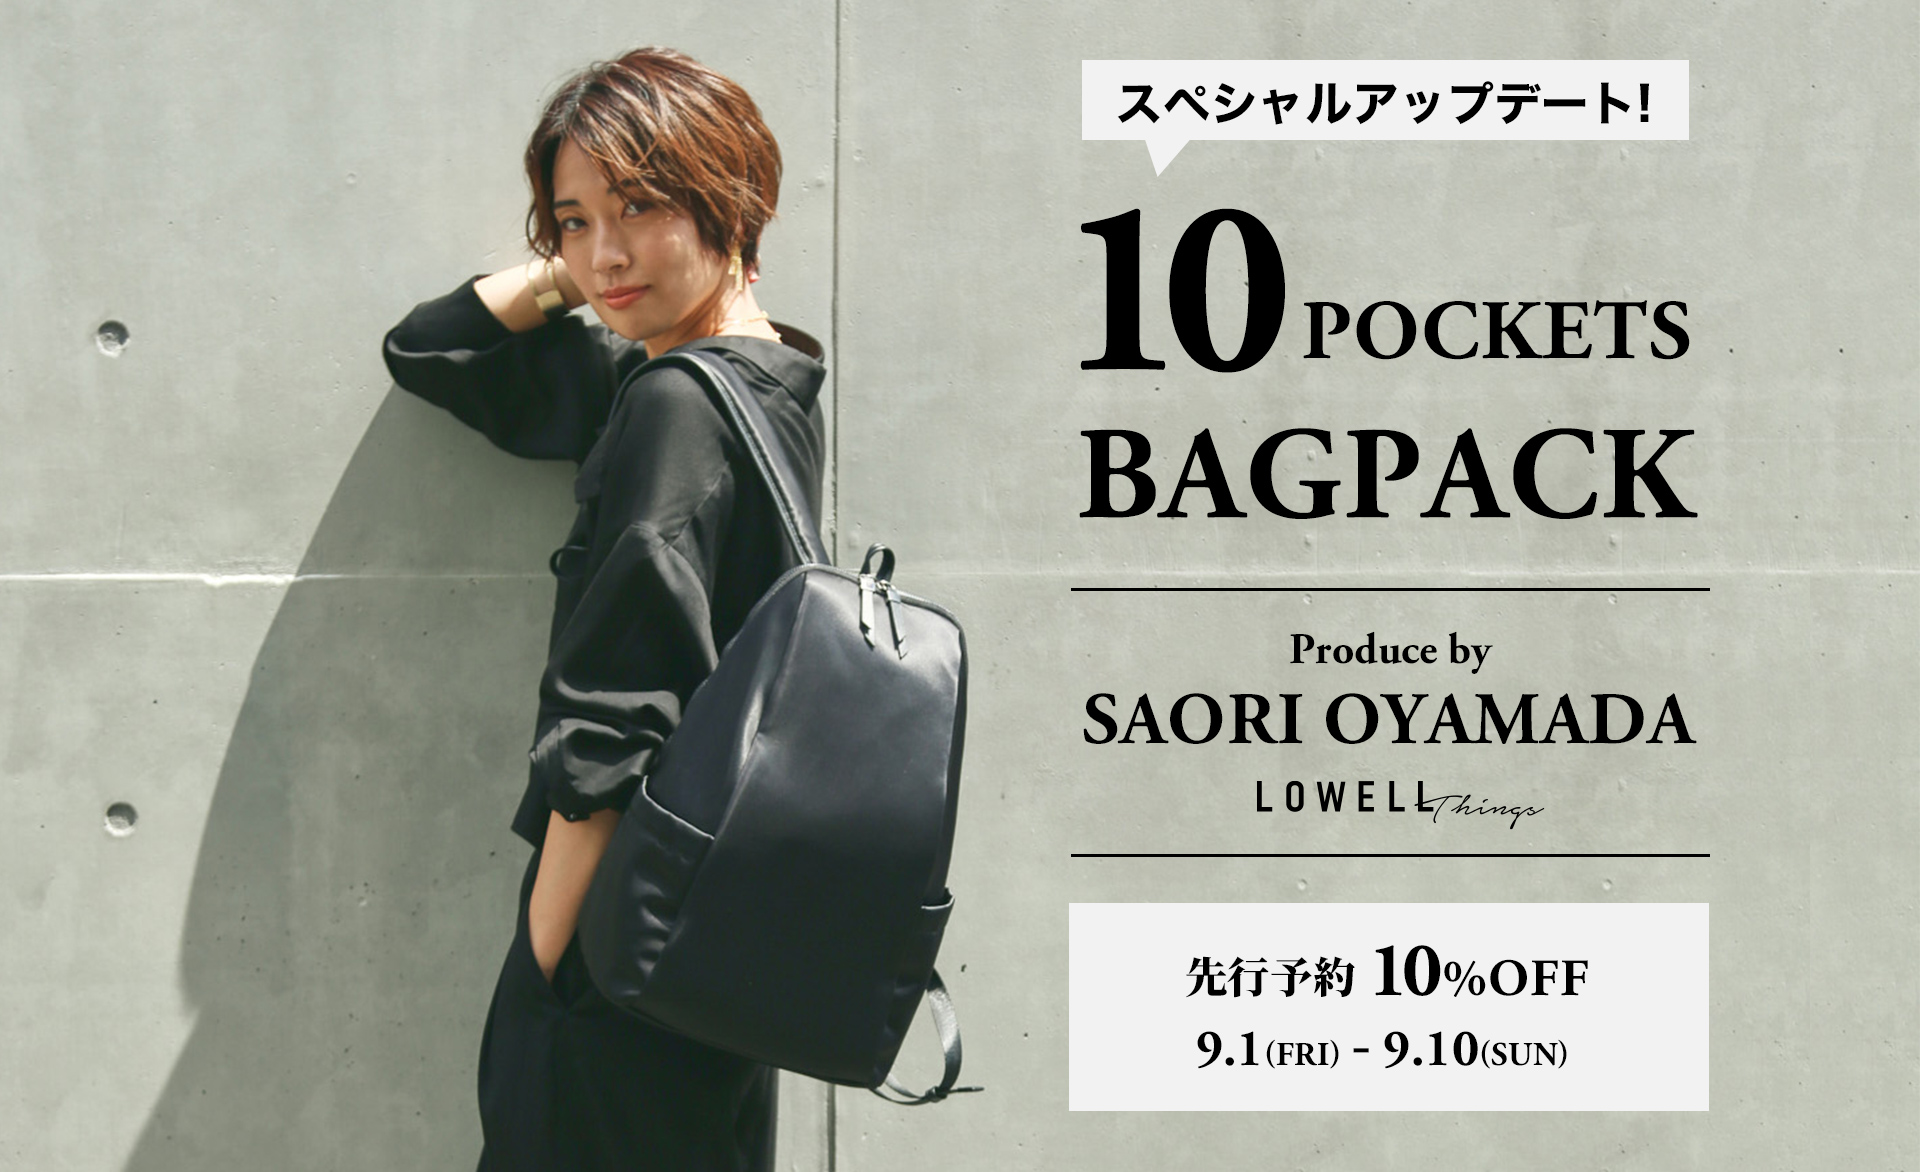 10POCKET BAGPACK produce by OYAMADA SAORI - LOWELL Things